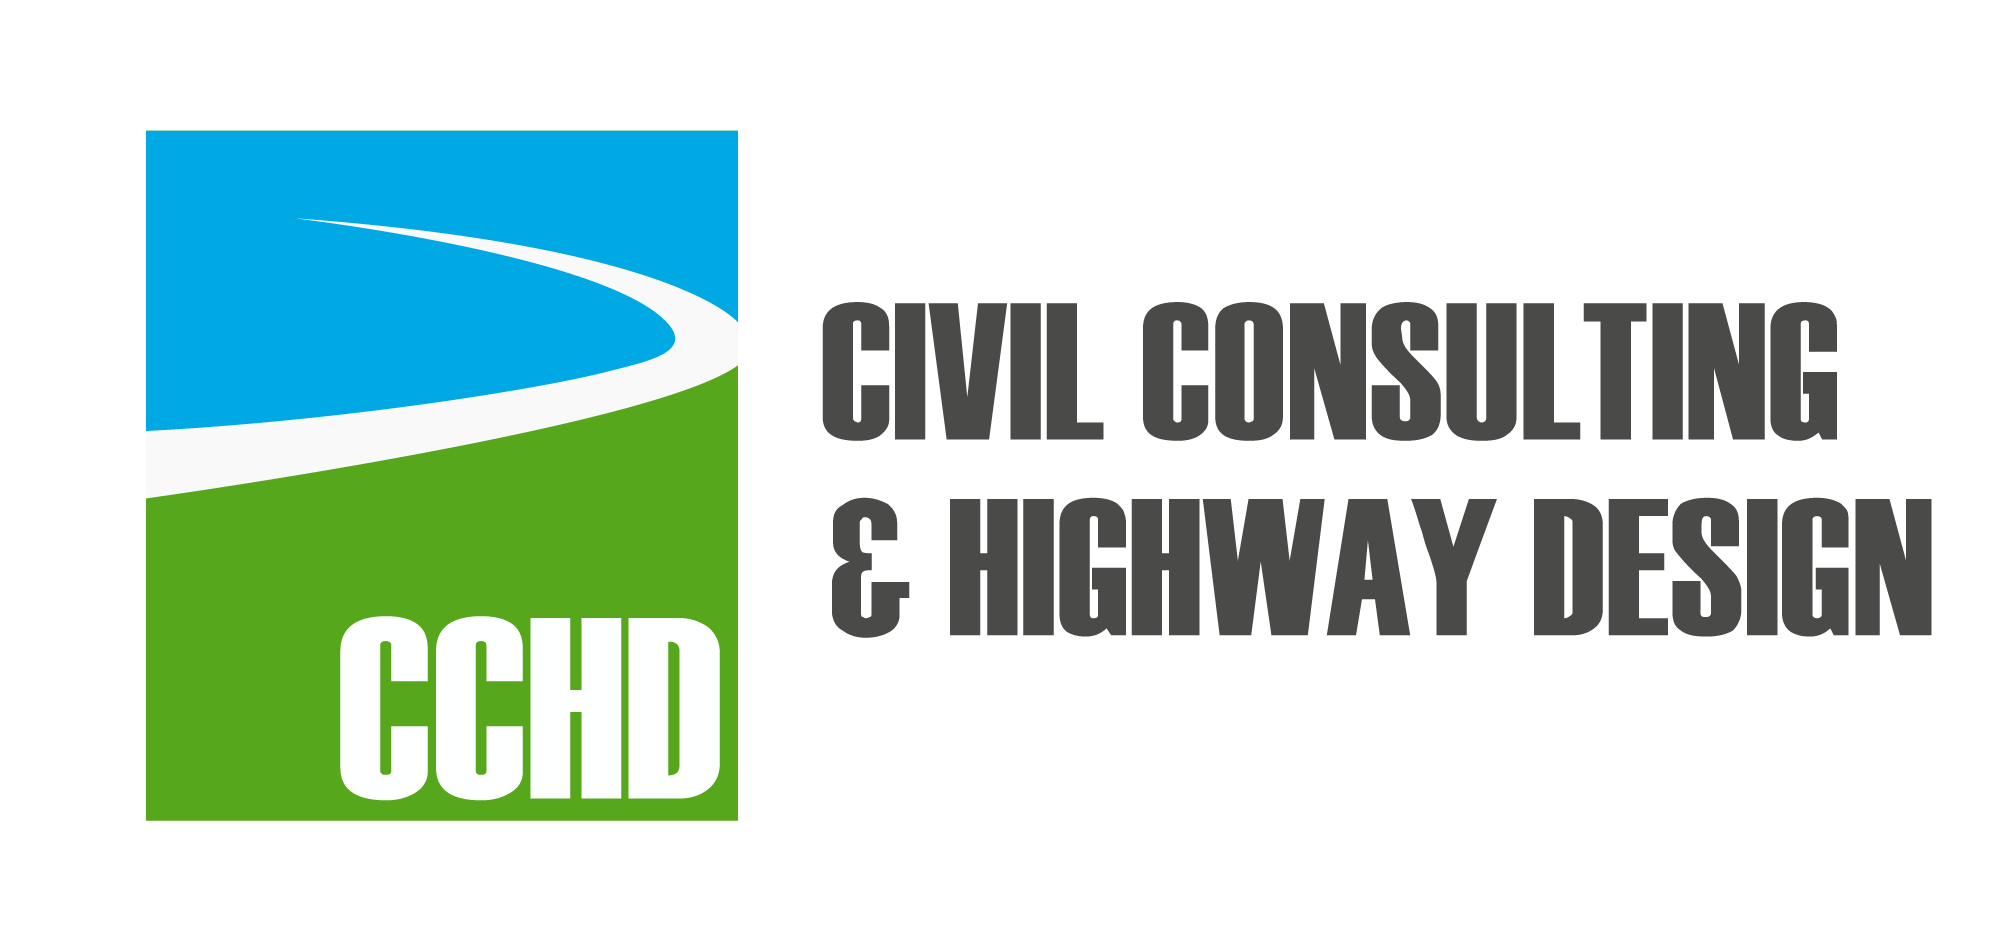 CCHD Logo - Home - CCHD Pty Ltd (Civil Consulting & Highway Design)